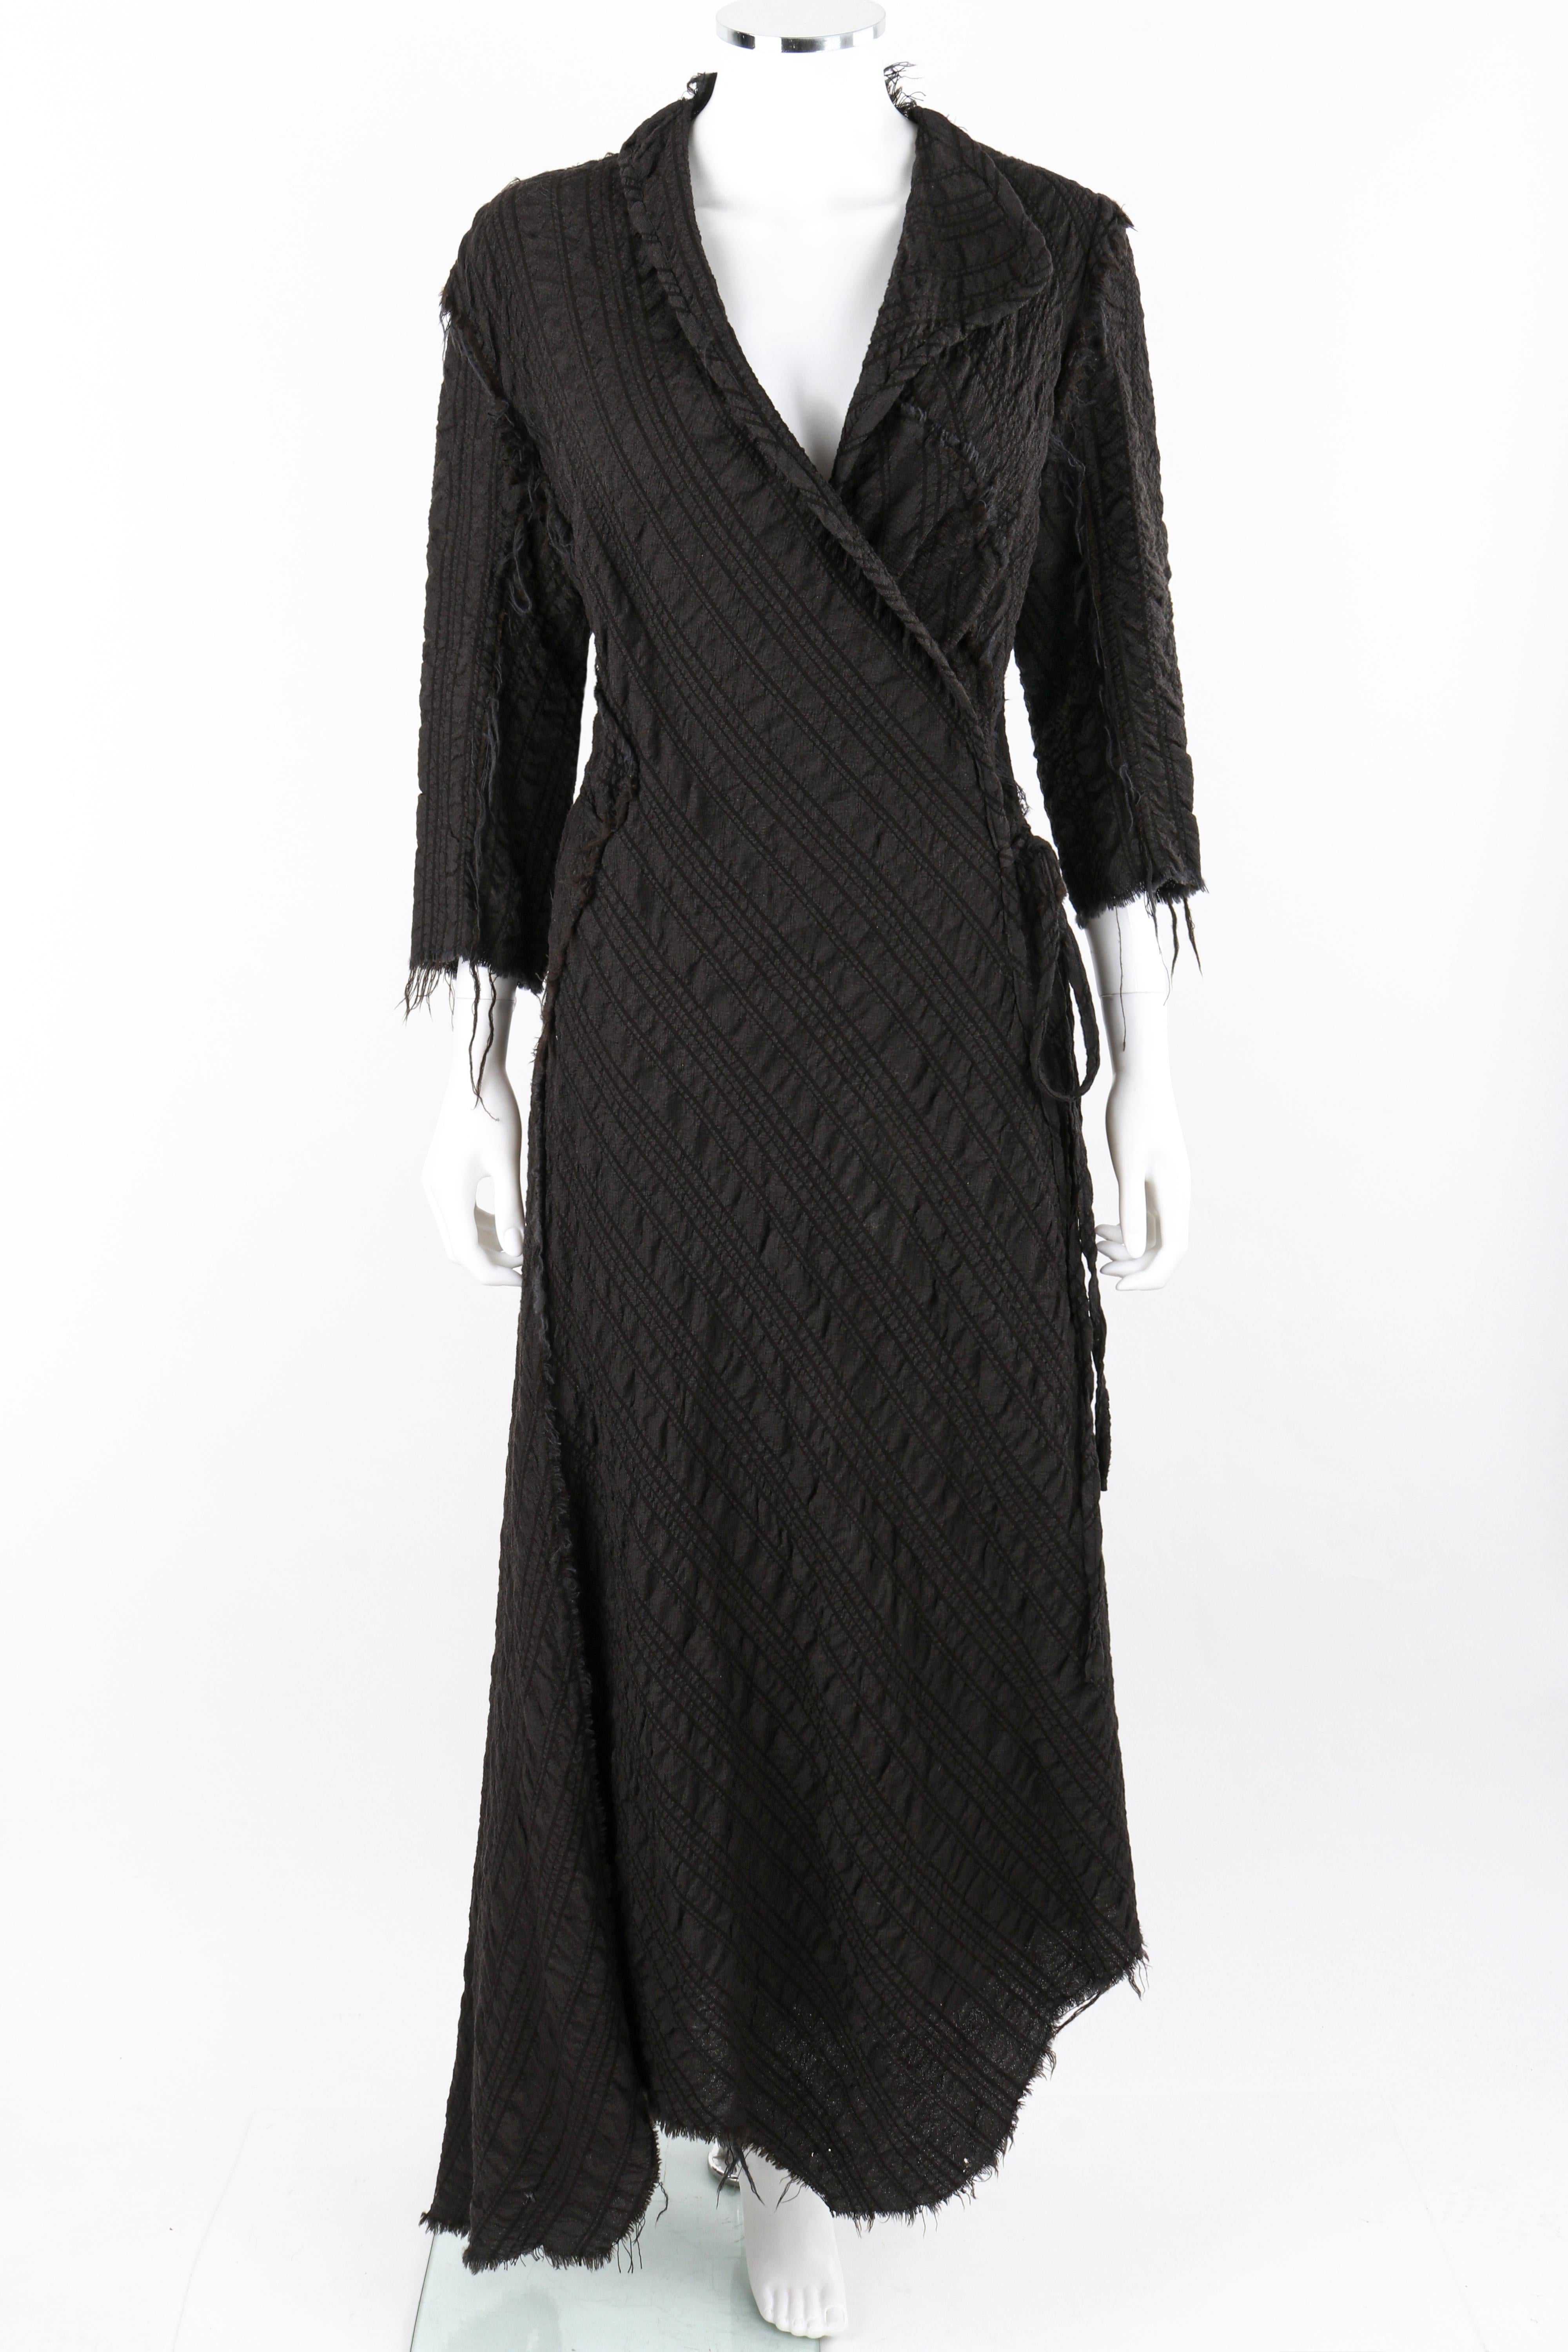 GARY GRAHAM 2003 Black Wool Texture Distressed Asymmetrical Maxi Wrap Dress OOAK

Brand / Manufacturer: Gary Graham
Collection: Dated 